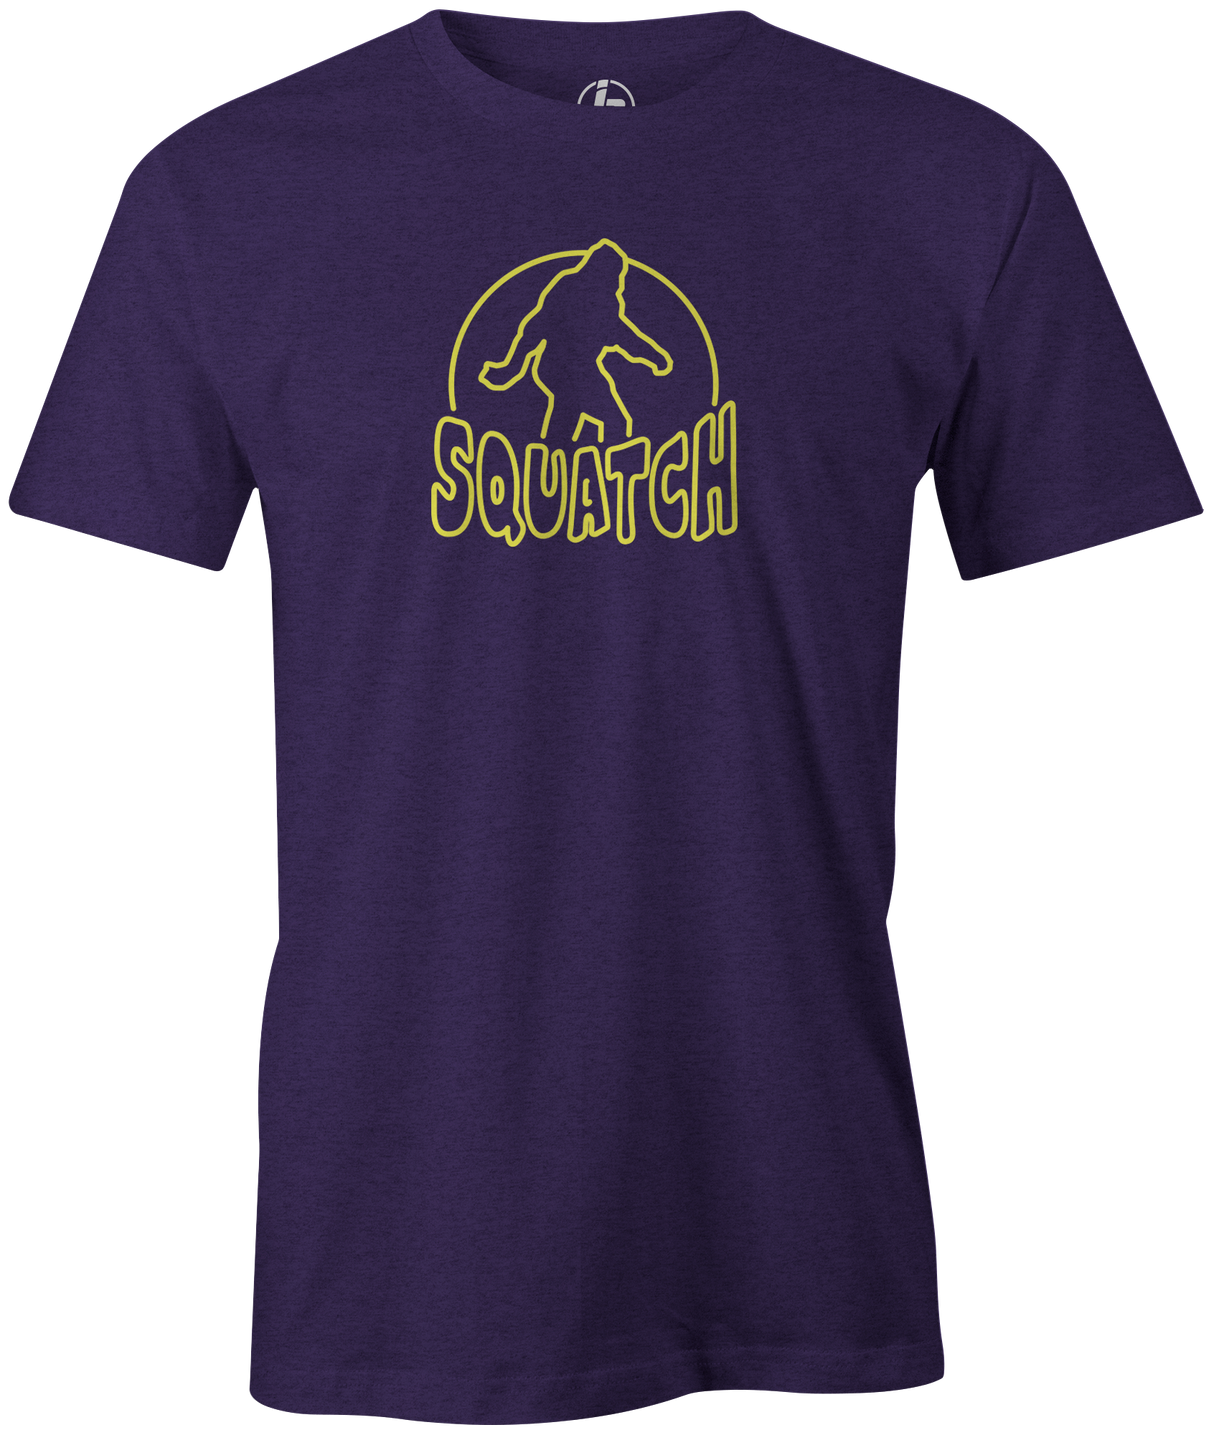 Radical Squatch Men's T-Shirt, Purple, bowling, bowling ball, tee, tee shirt, tee-shirt, t shirt, t-shirt, tees, league bowling team shirt, tournament shirt, funny, cool, awesome, brunswick, brand